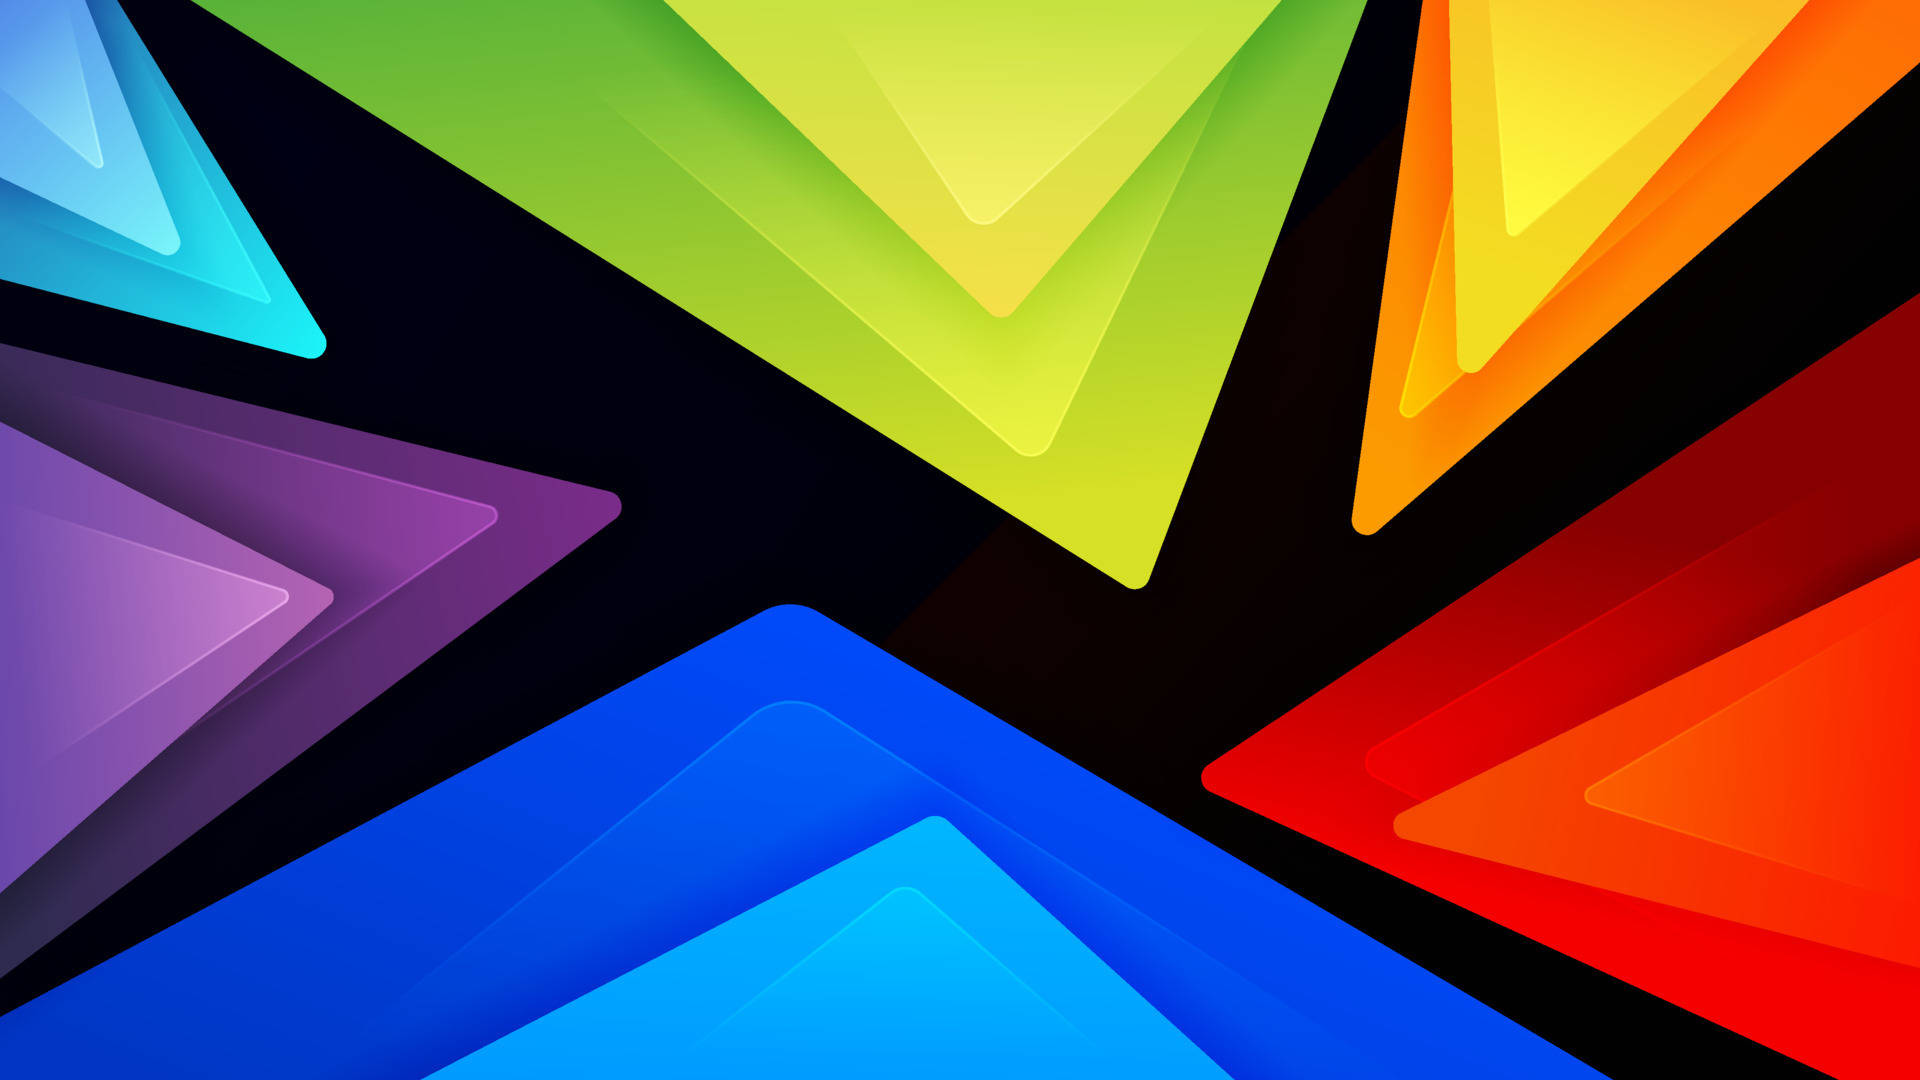 Ipad Pro 12.9 Colorful Triangles Wallpaper